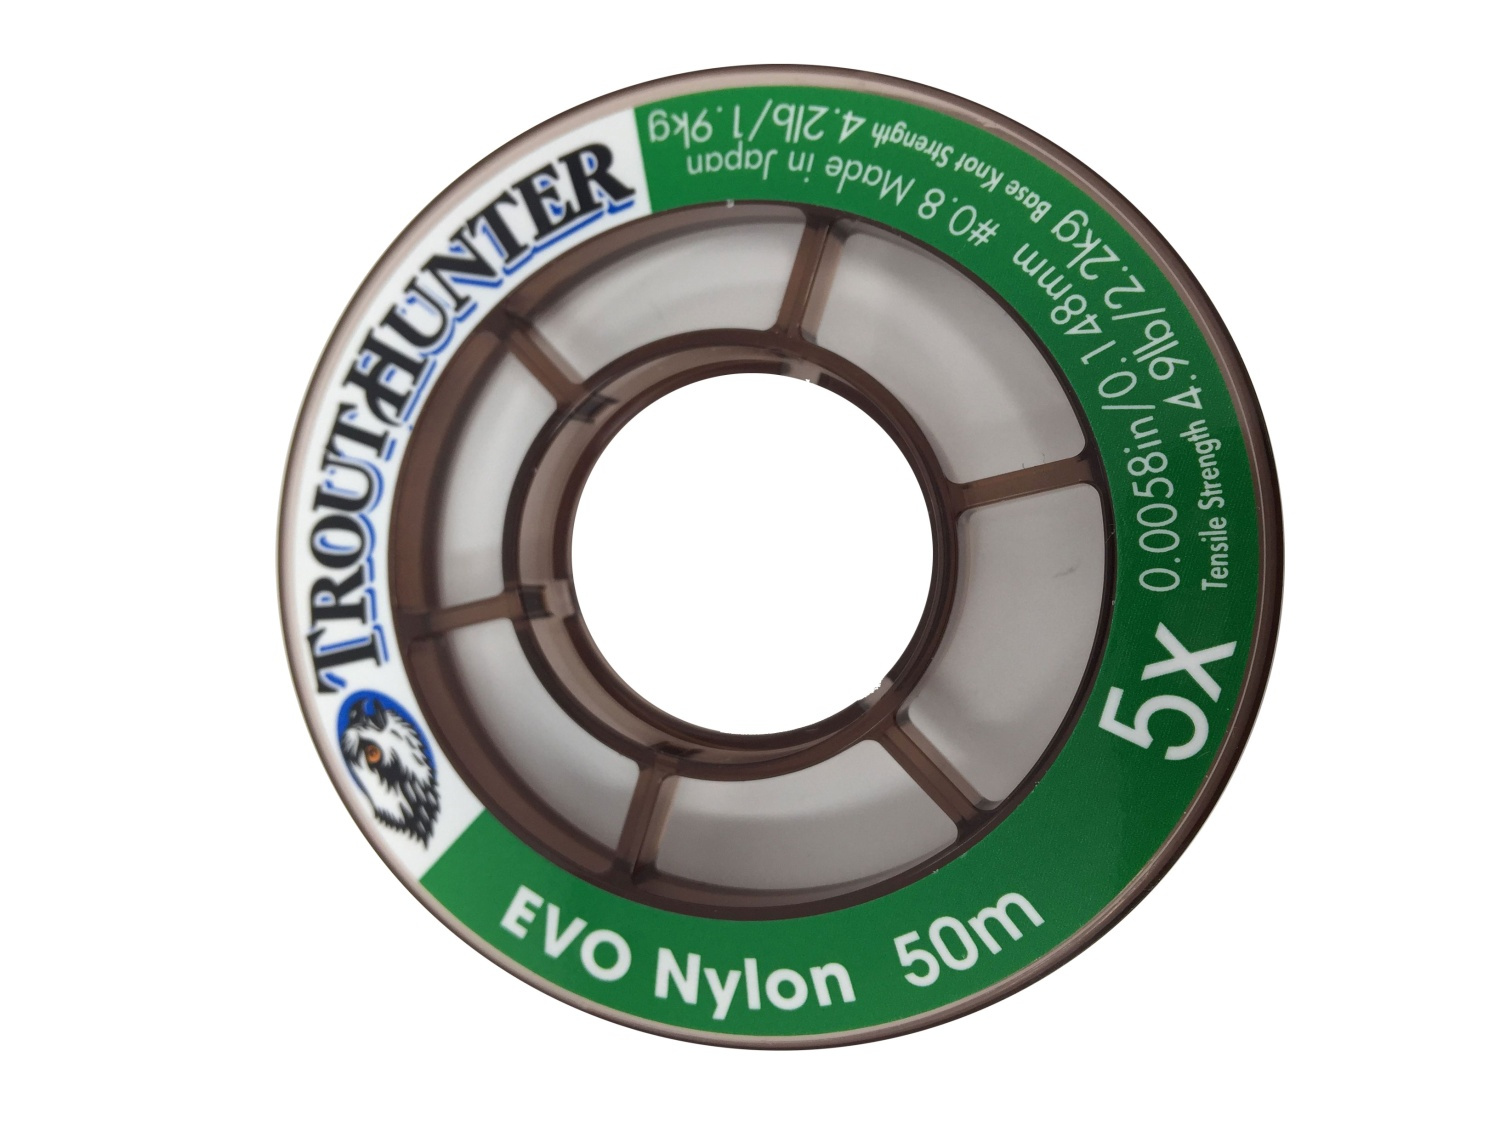 Trout Hunter Nylon EVO Tafsmaterial - 5.5X - 0,138 mm